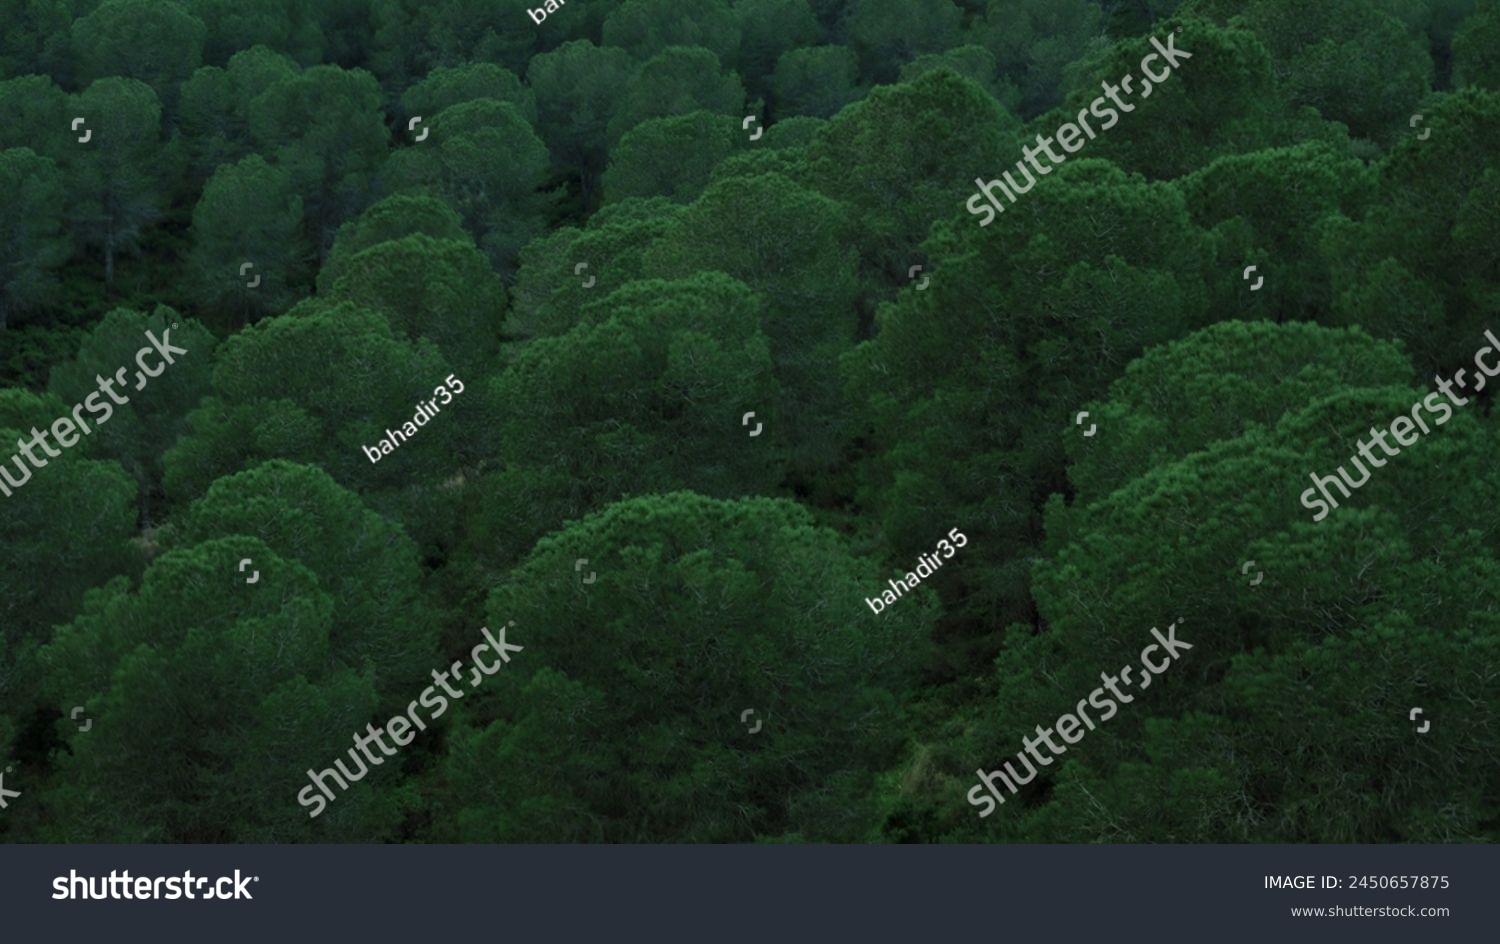 Verdant Treetop Vista: Clustered Cloud-Like Trees #2450657875